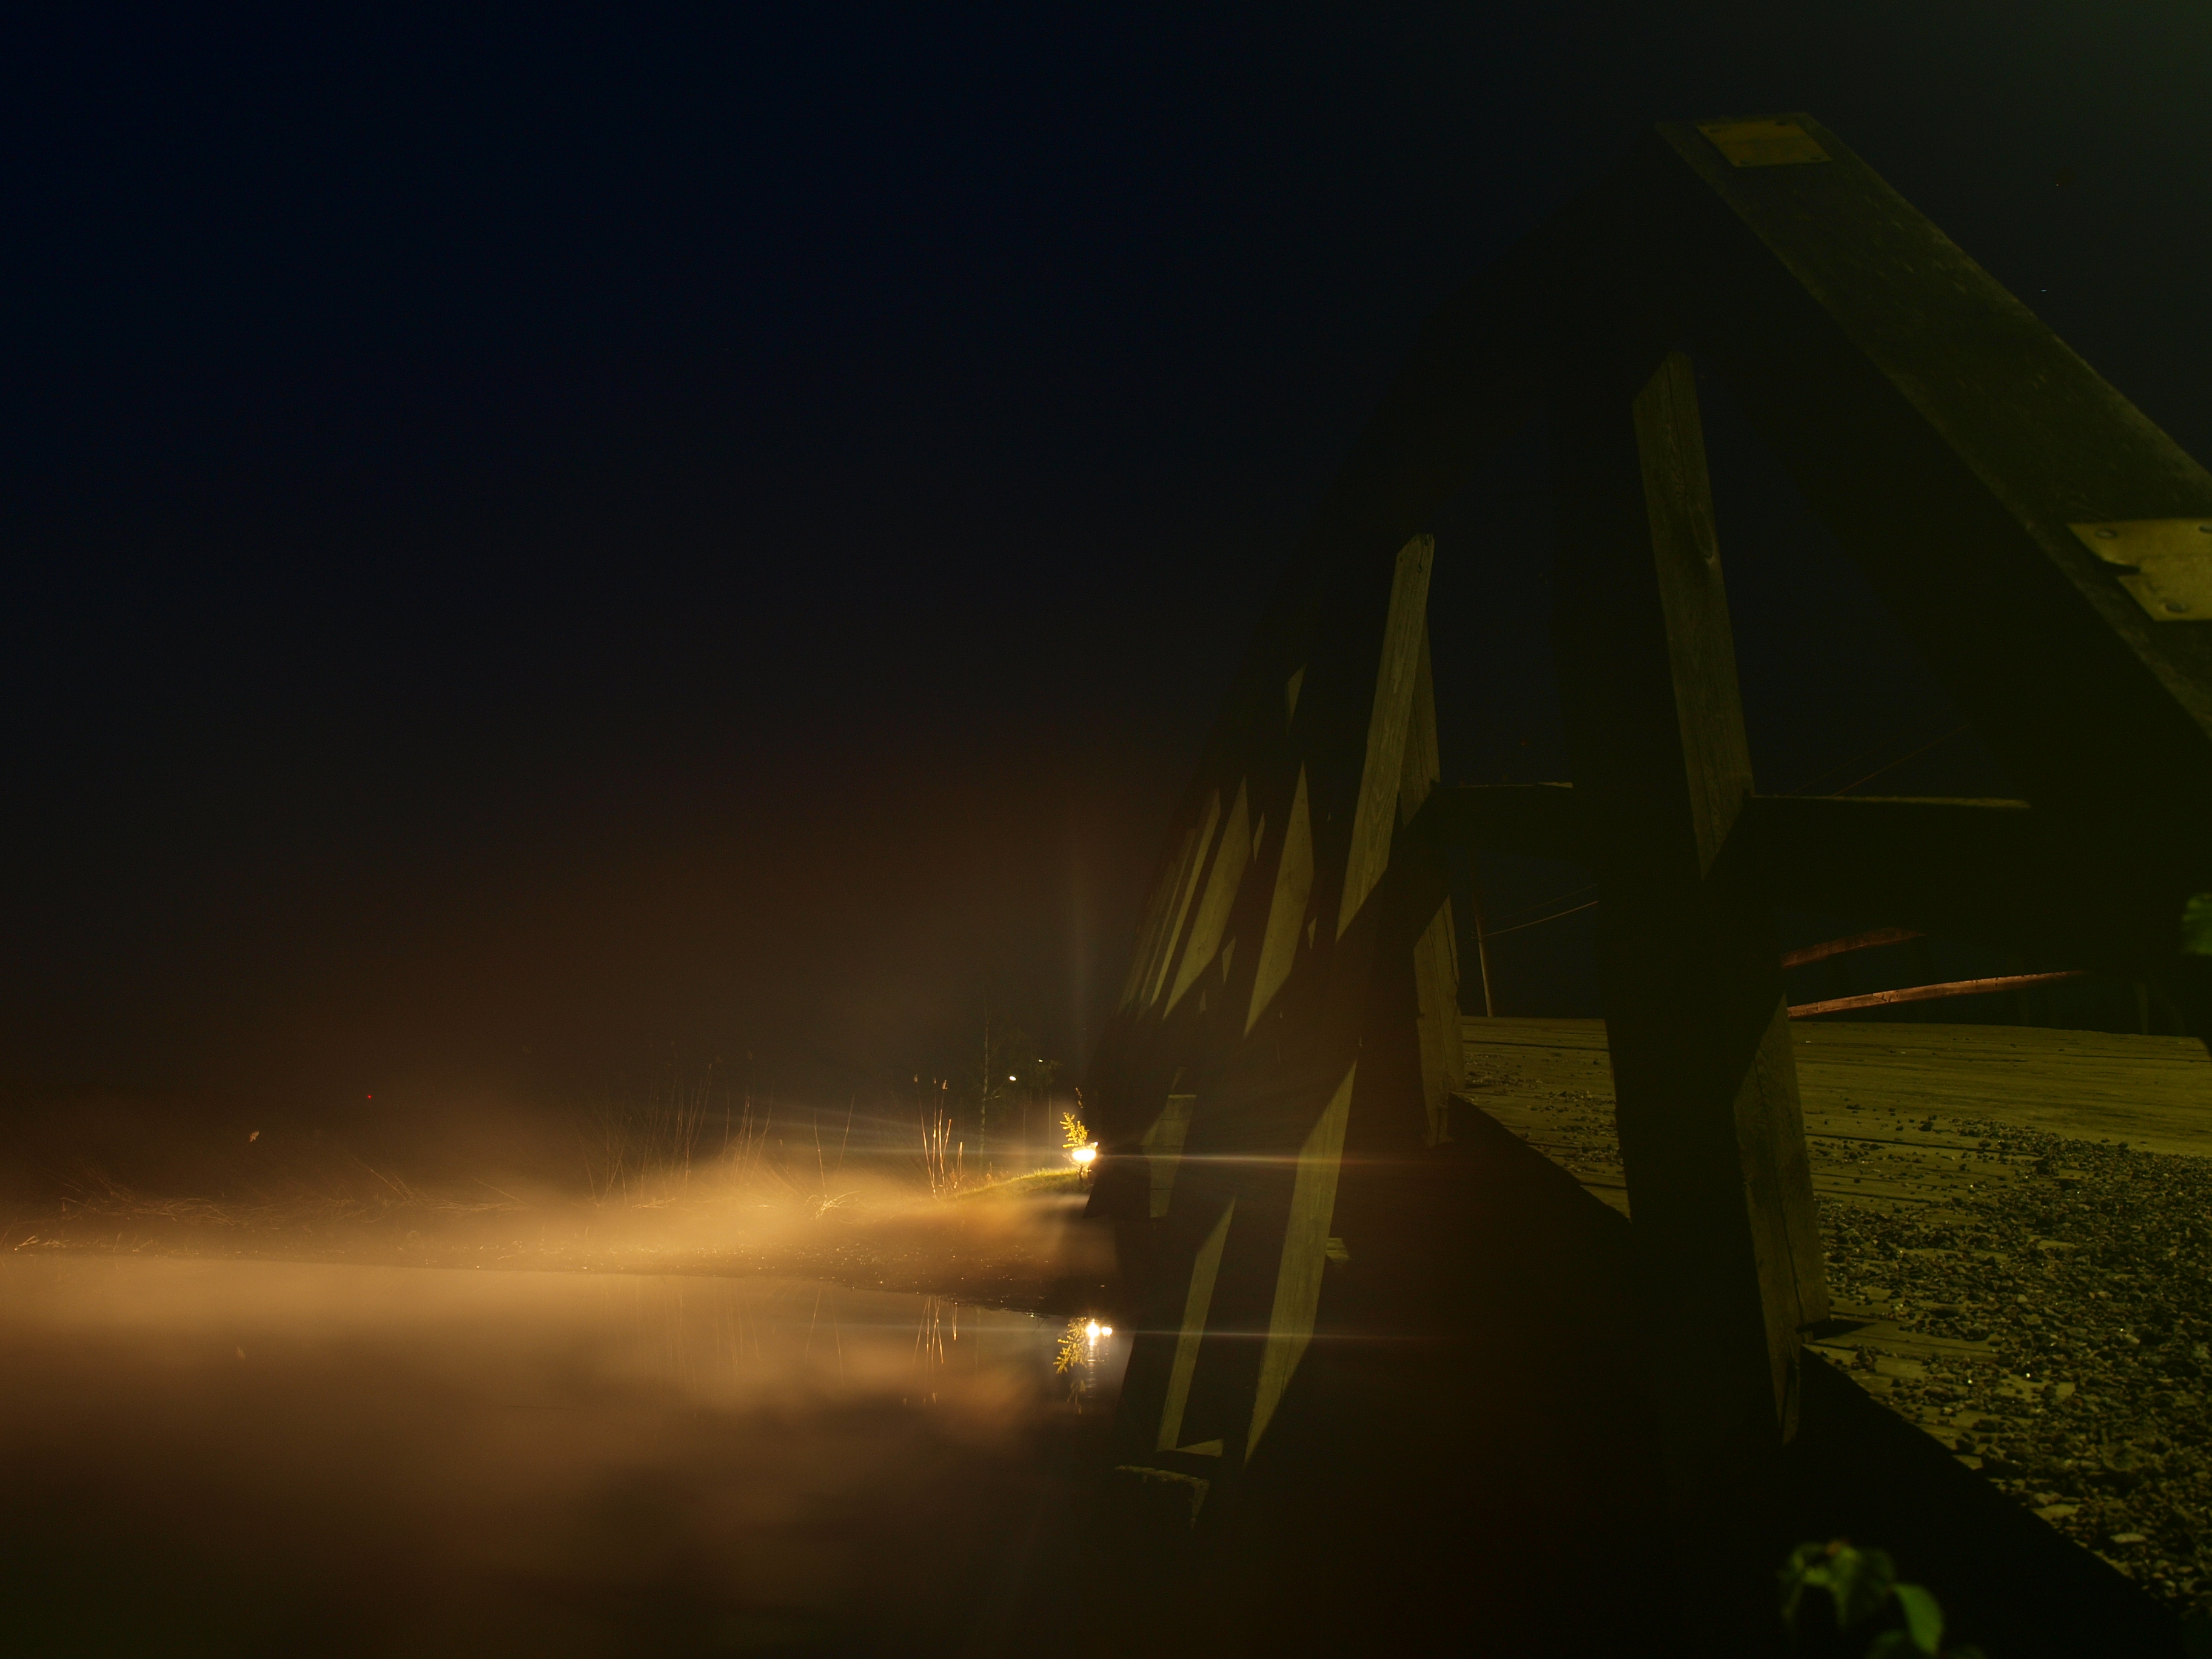 Bridge at night photo